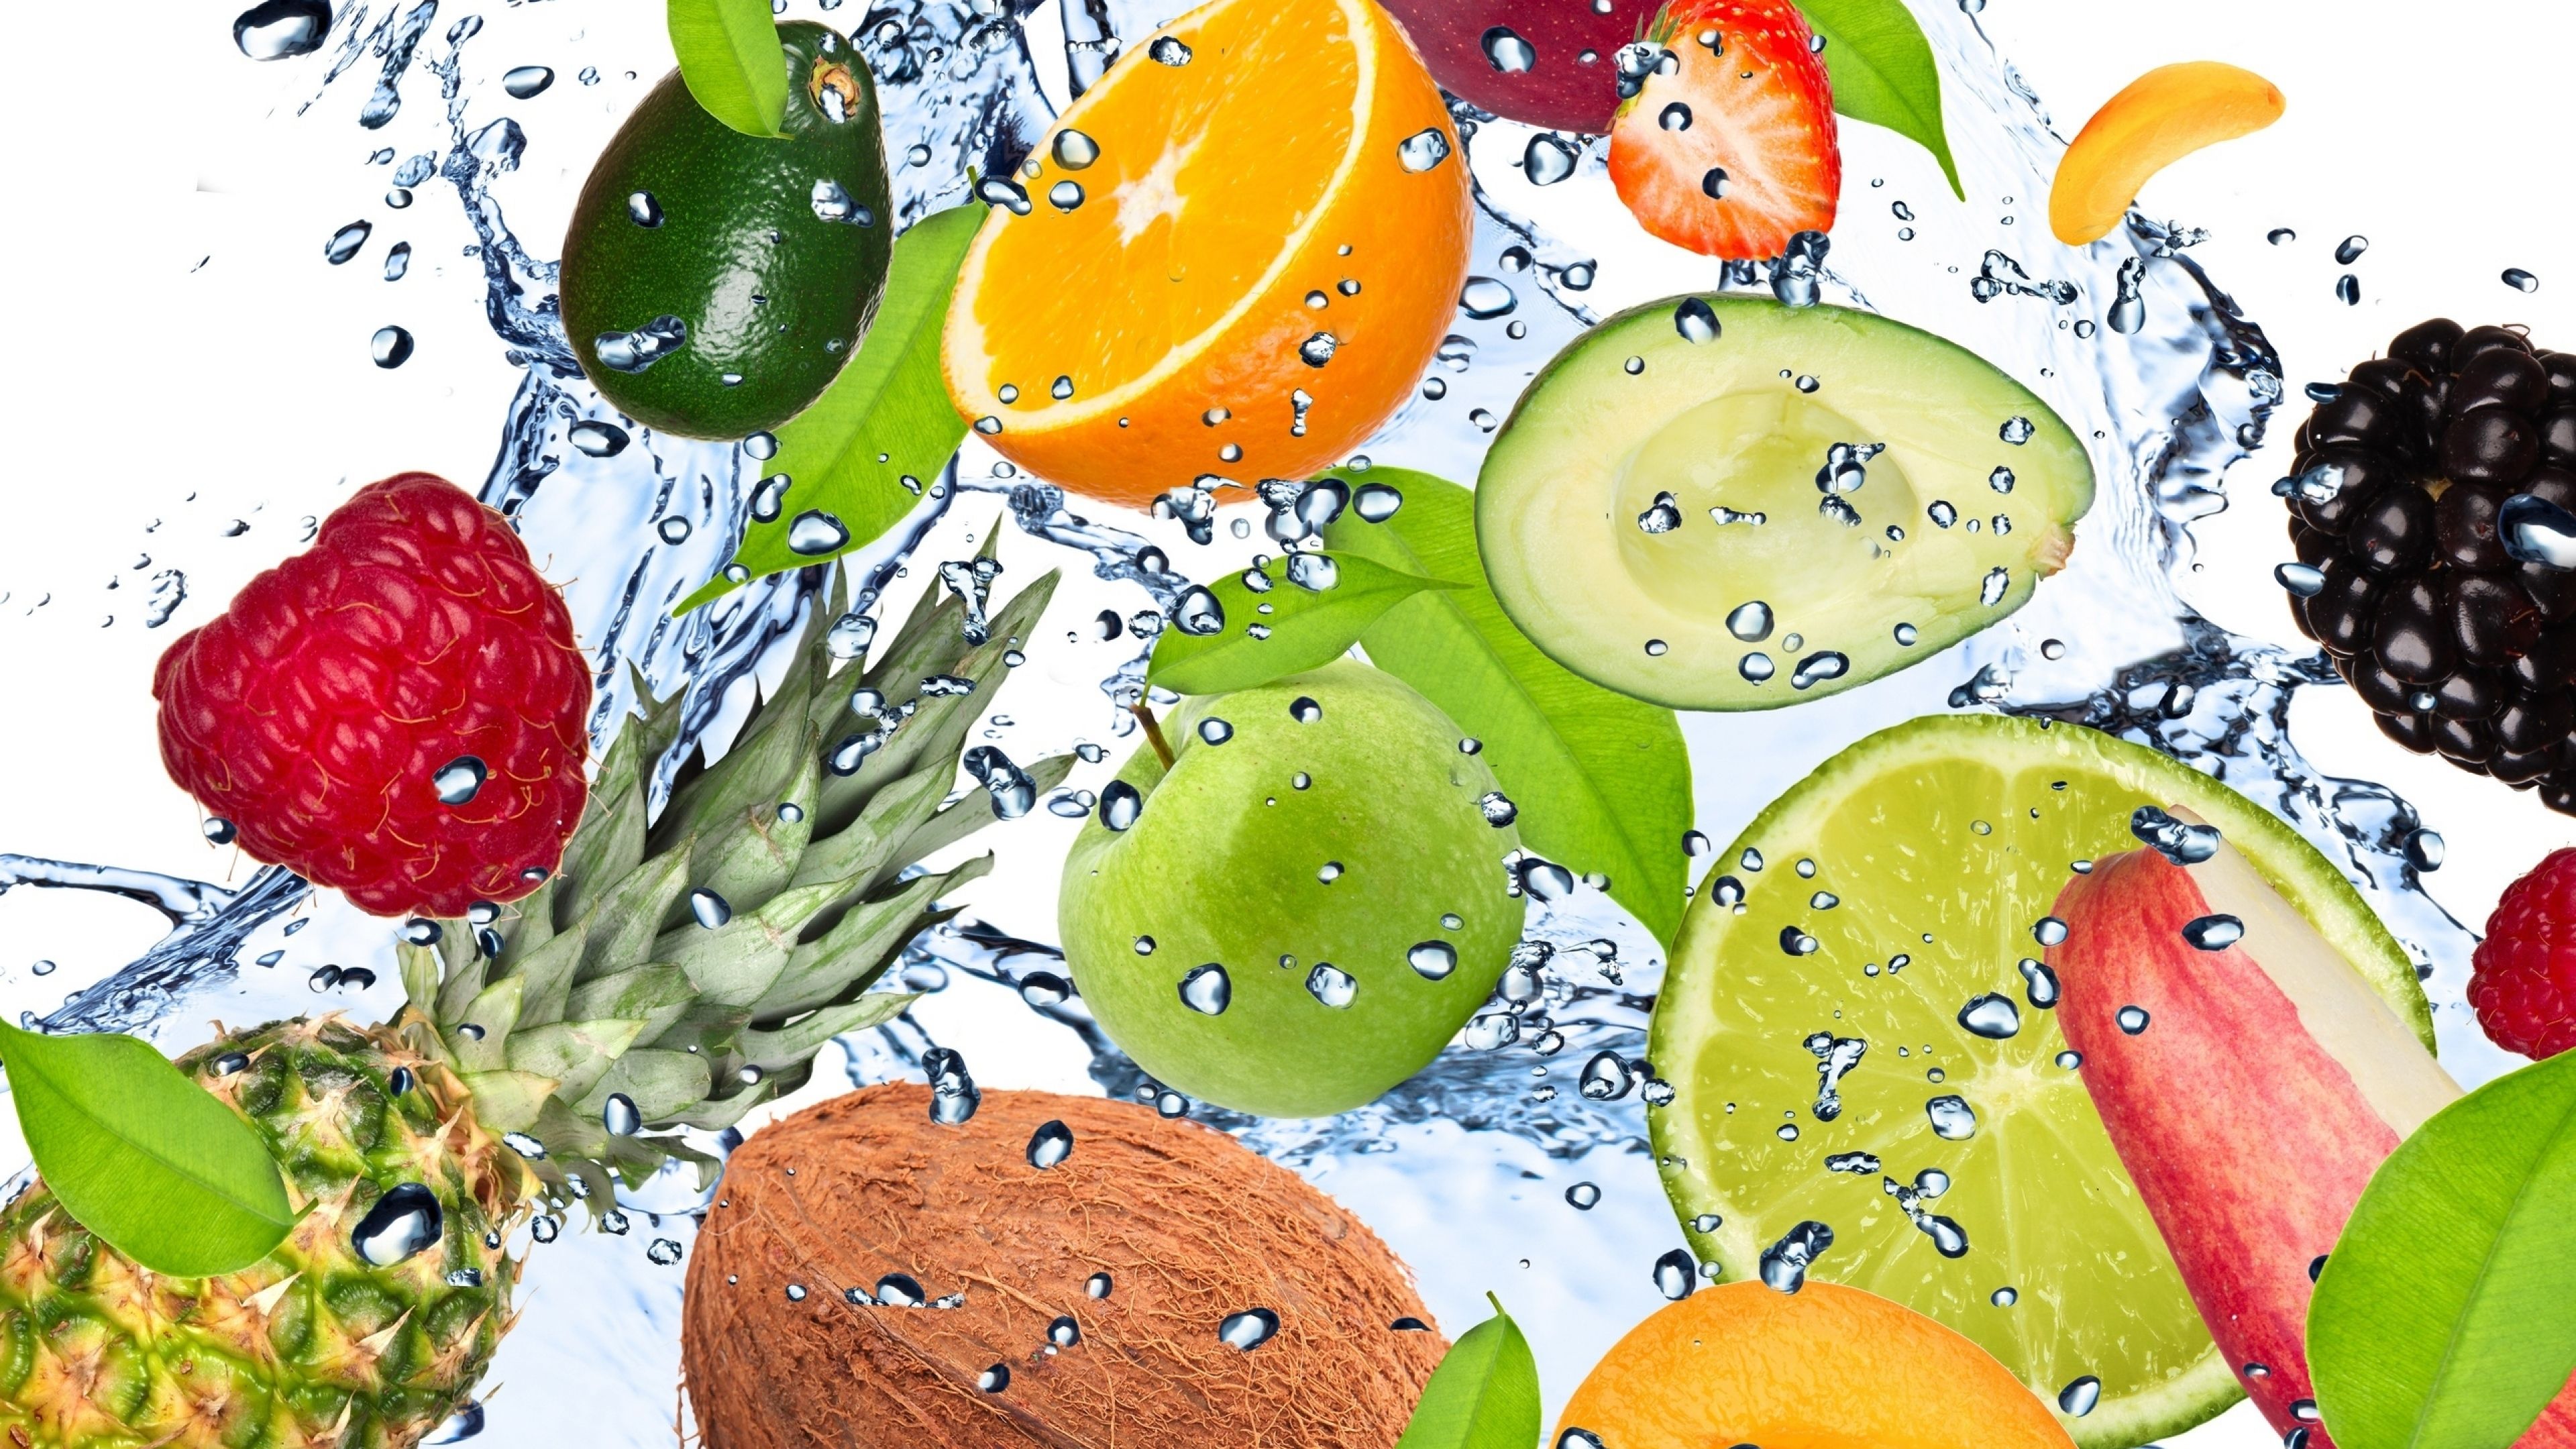 Download Wallpaper 3840x2160 Fruit, Fresh, Water, Drops, Spray